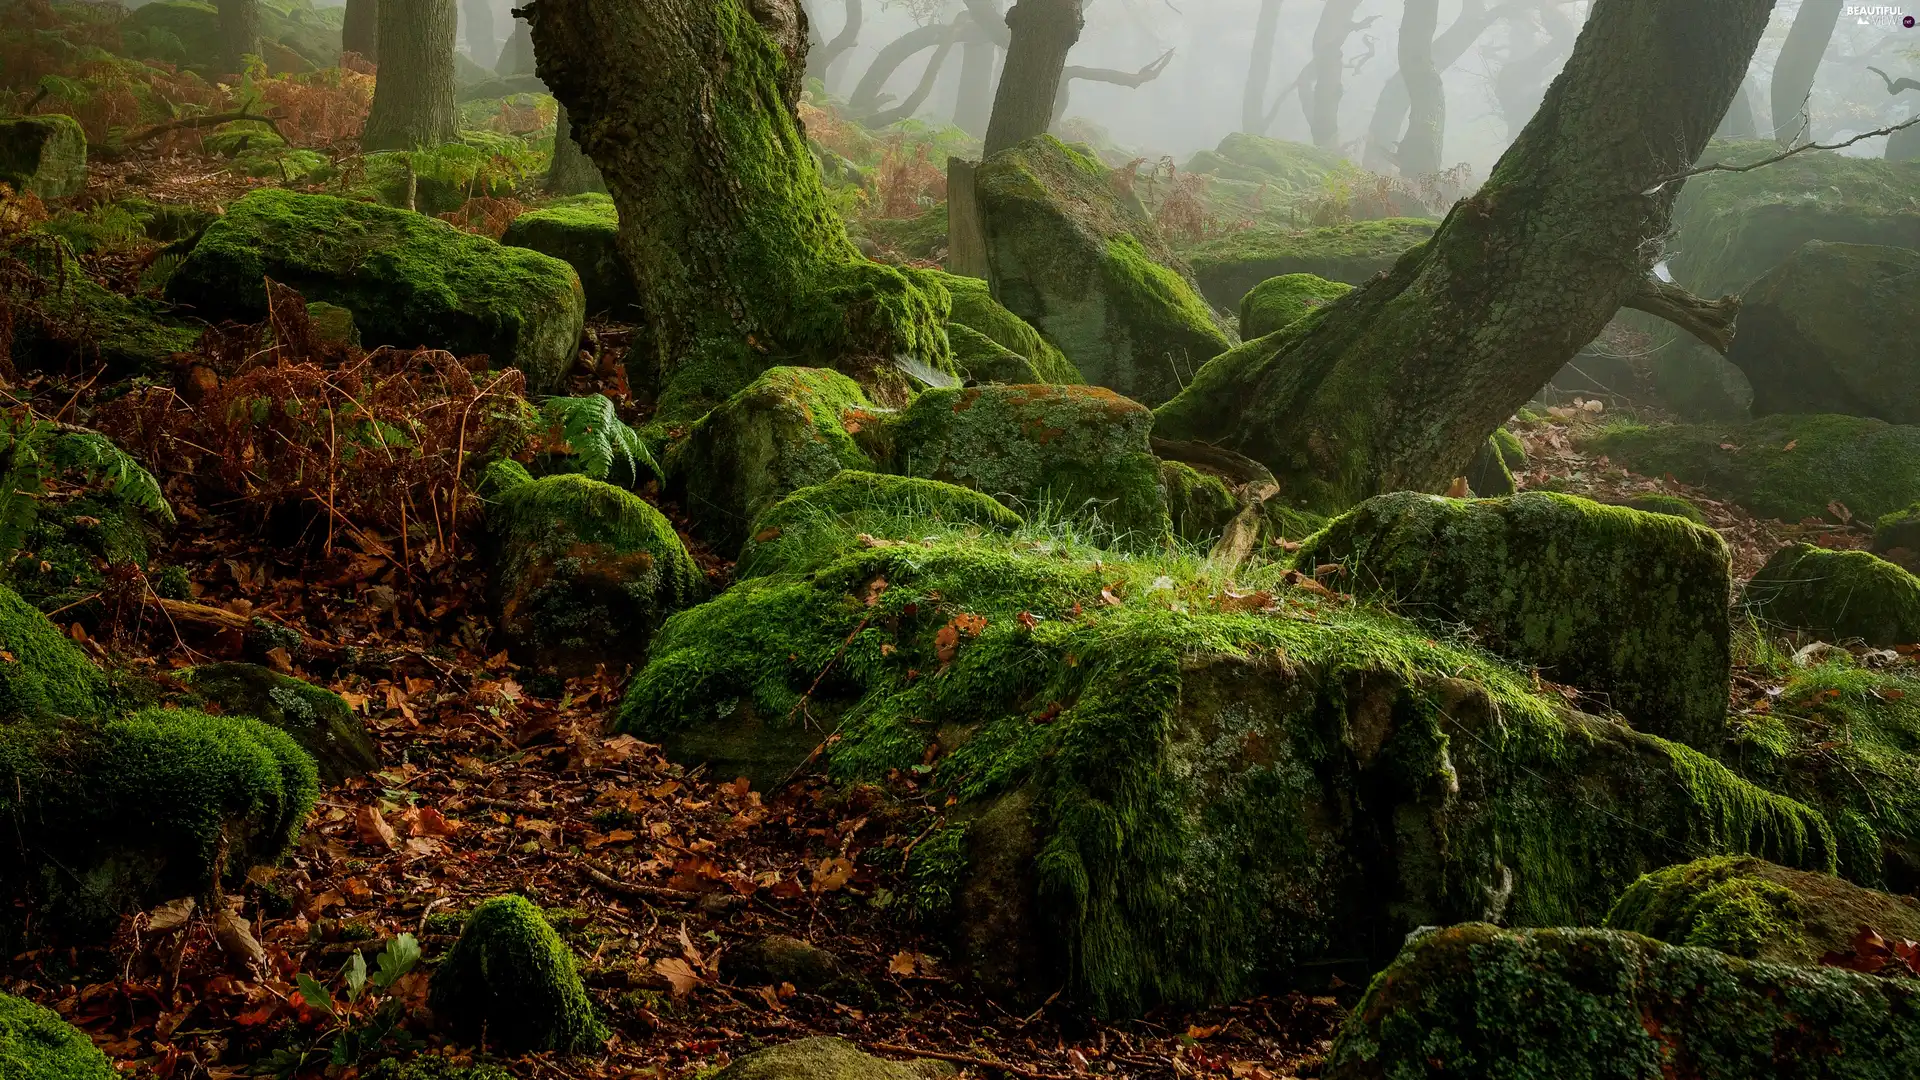 mossy, Stems, England, Fog, County Derbyshire, Stones, forest, Peak District National Park